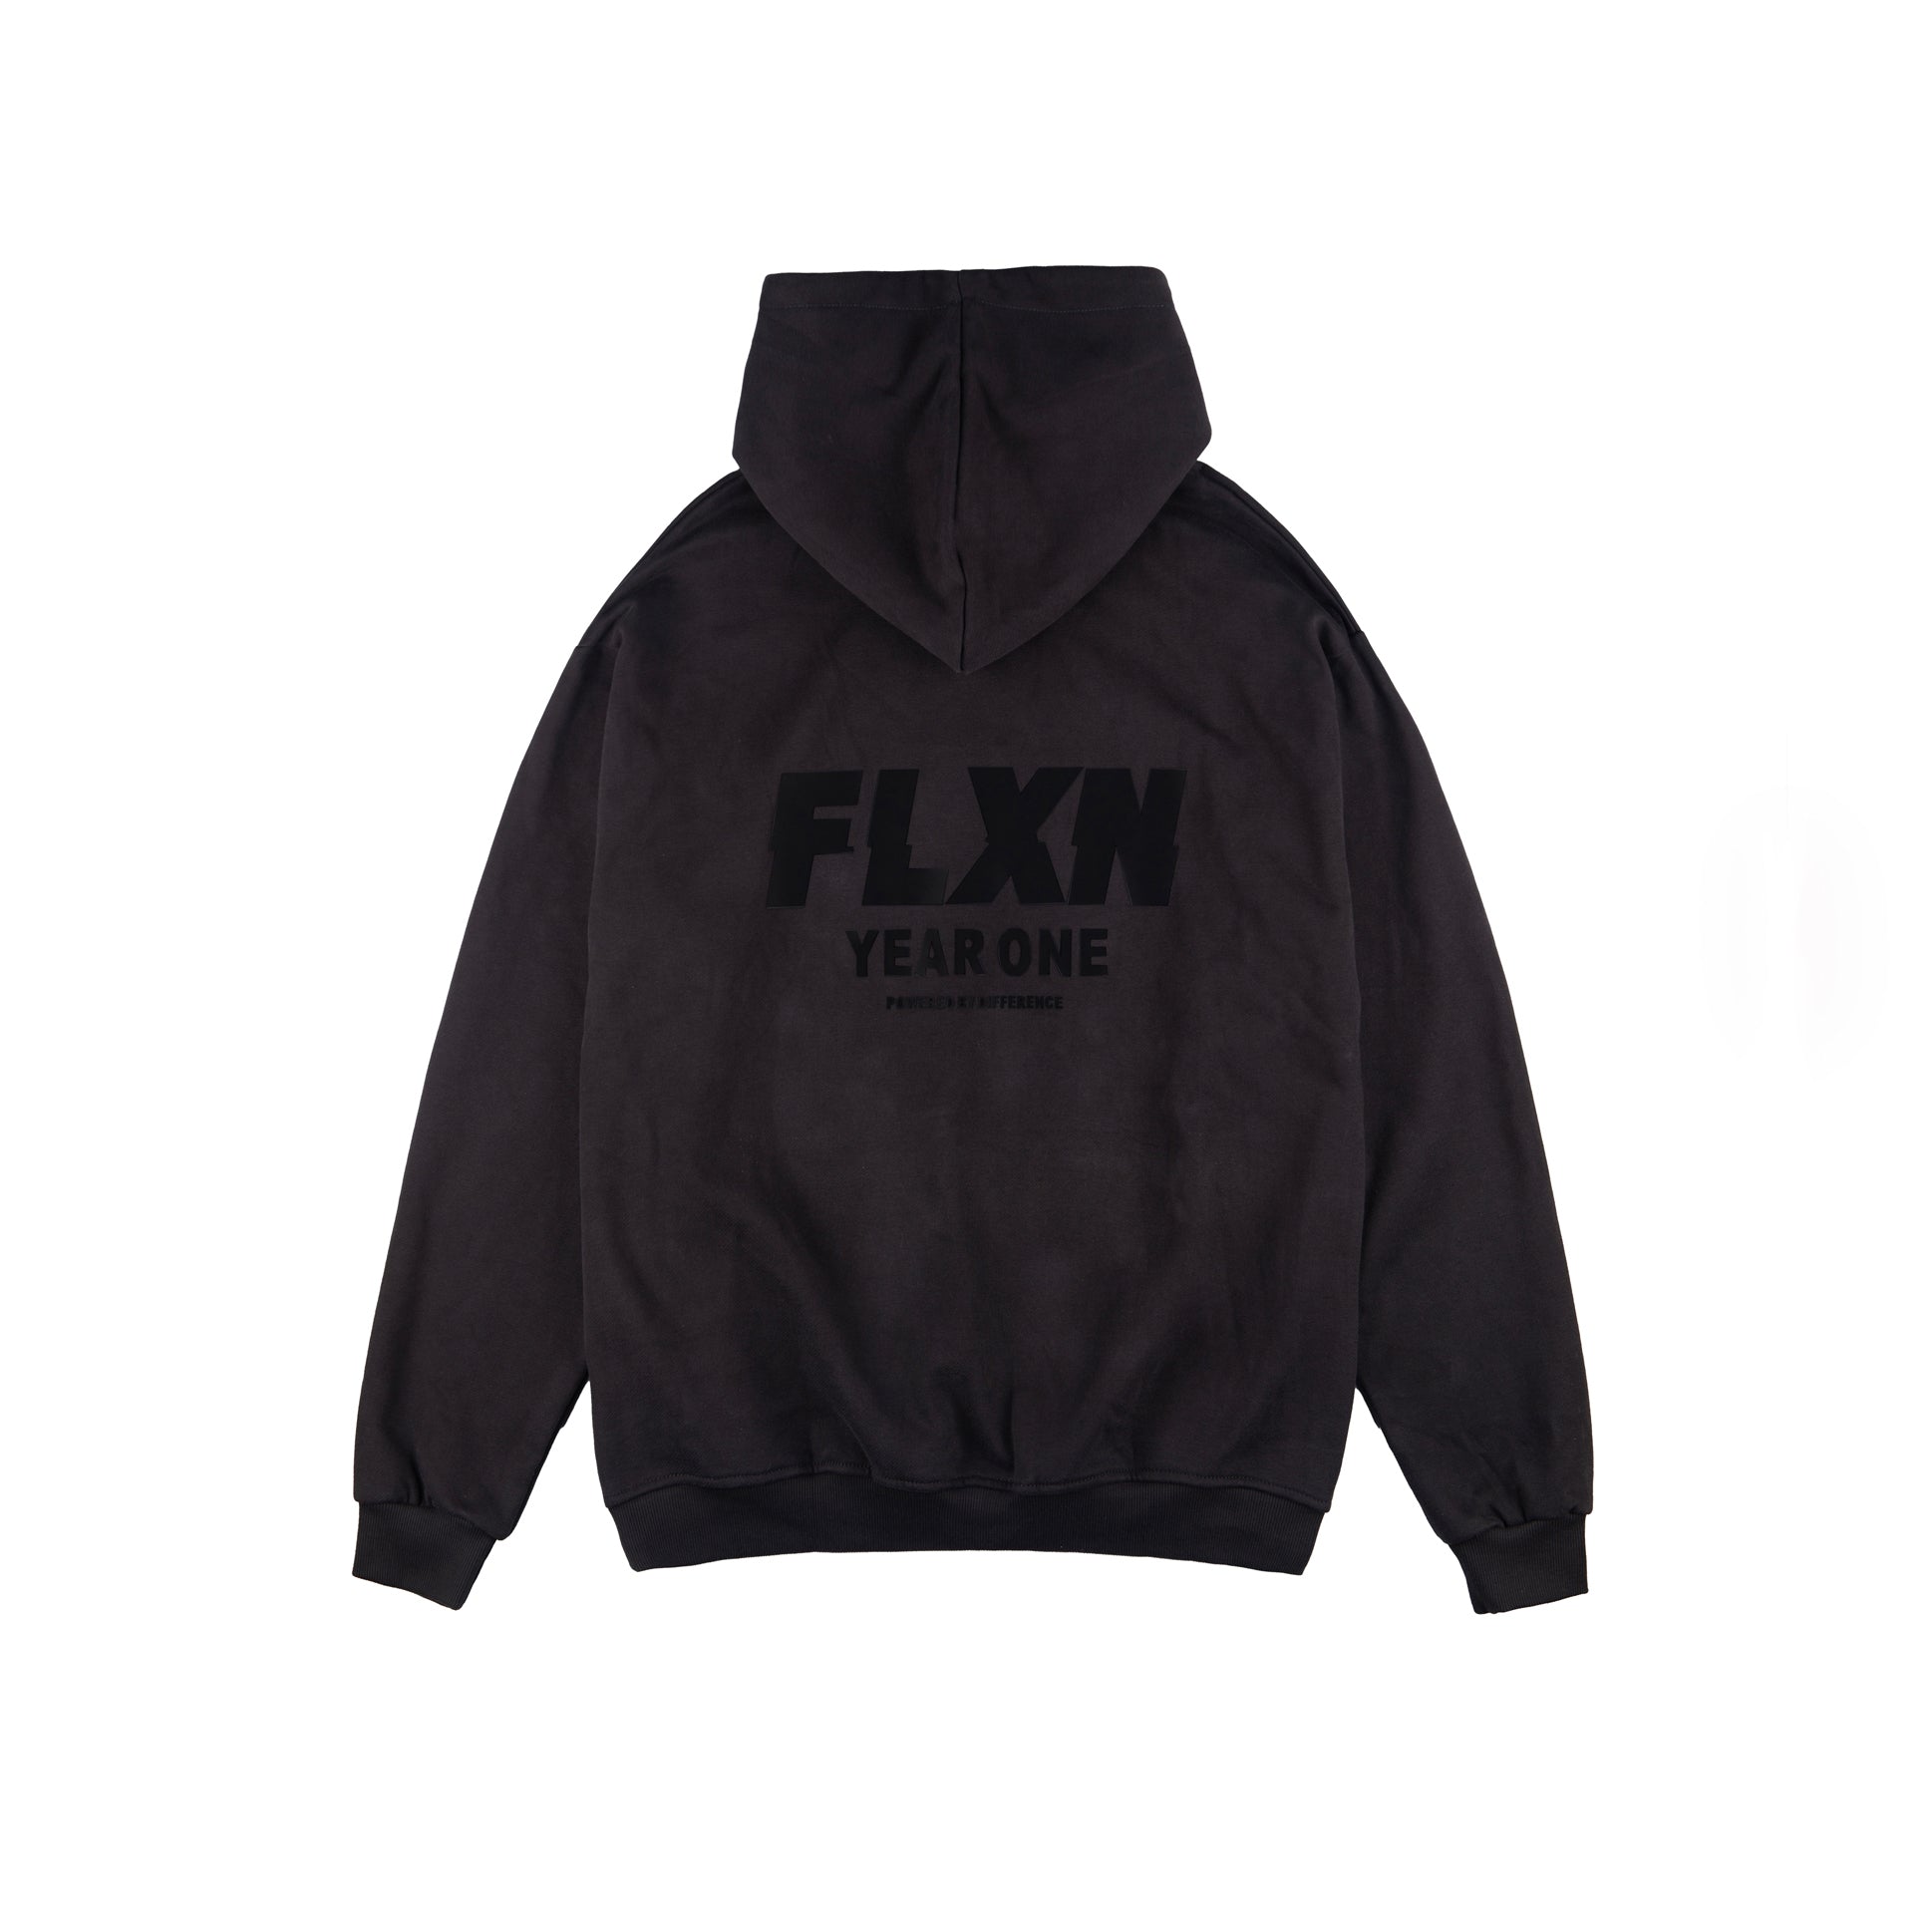 Year One Signature Hoodie - FLXN